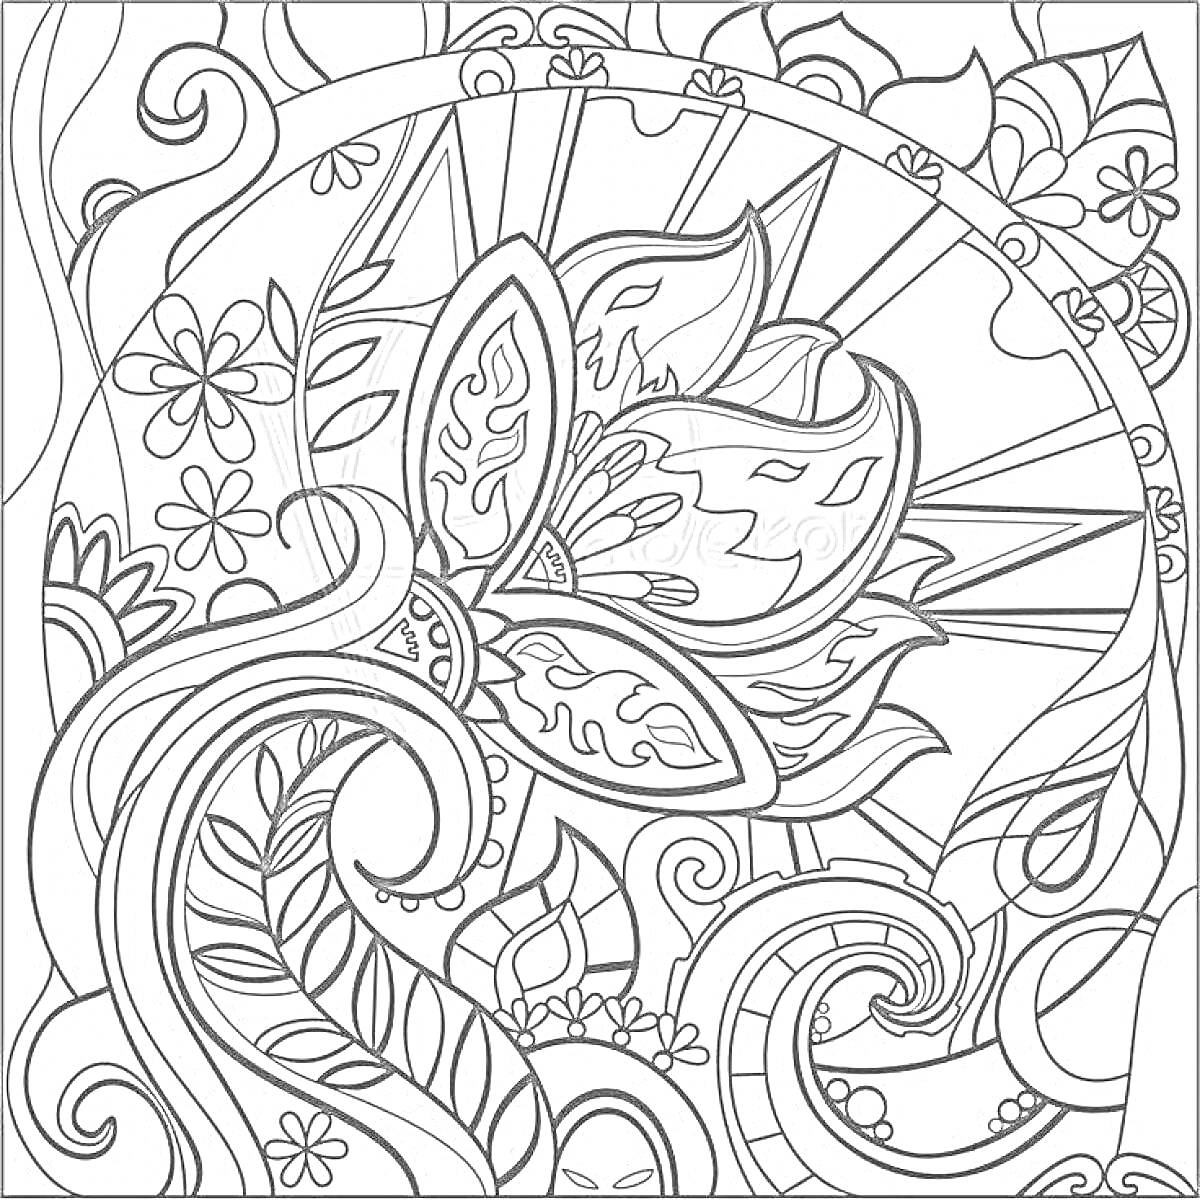 Раскраска Цветочная мандала с узорами и орнаментами